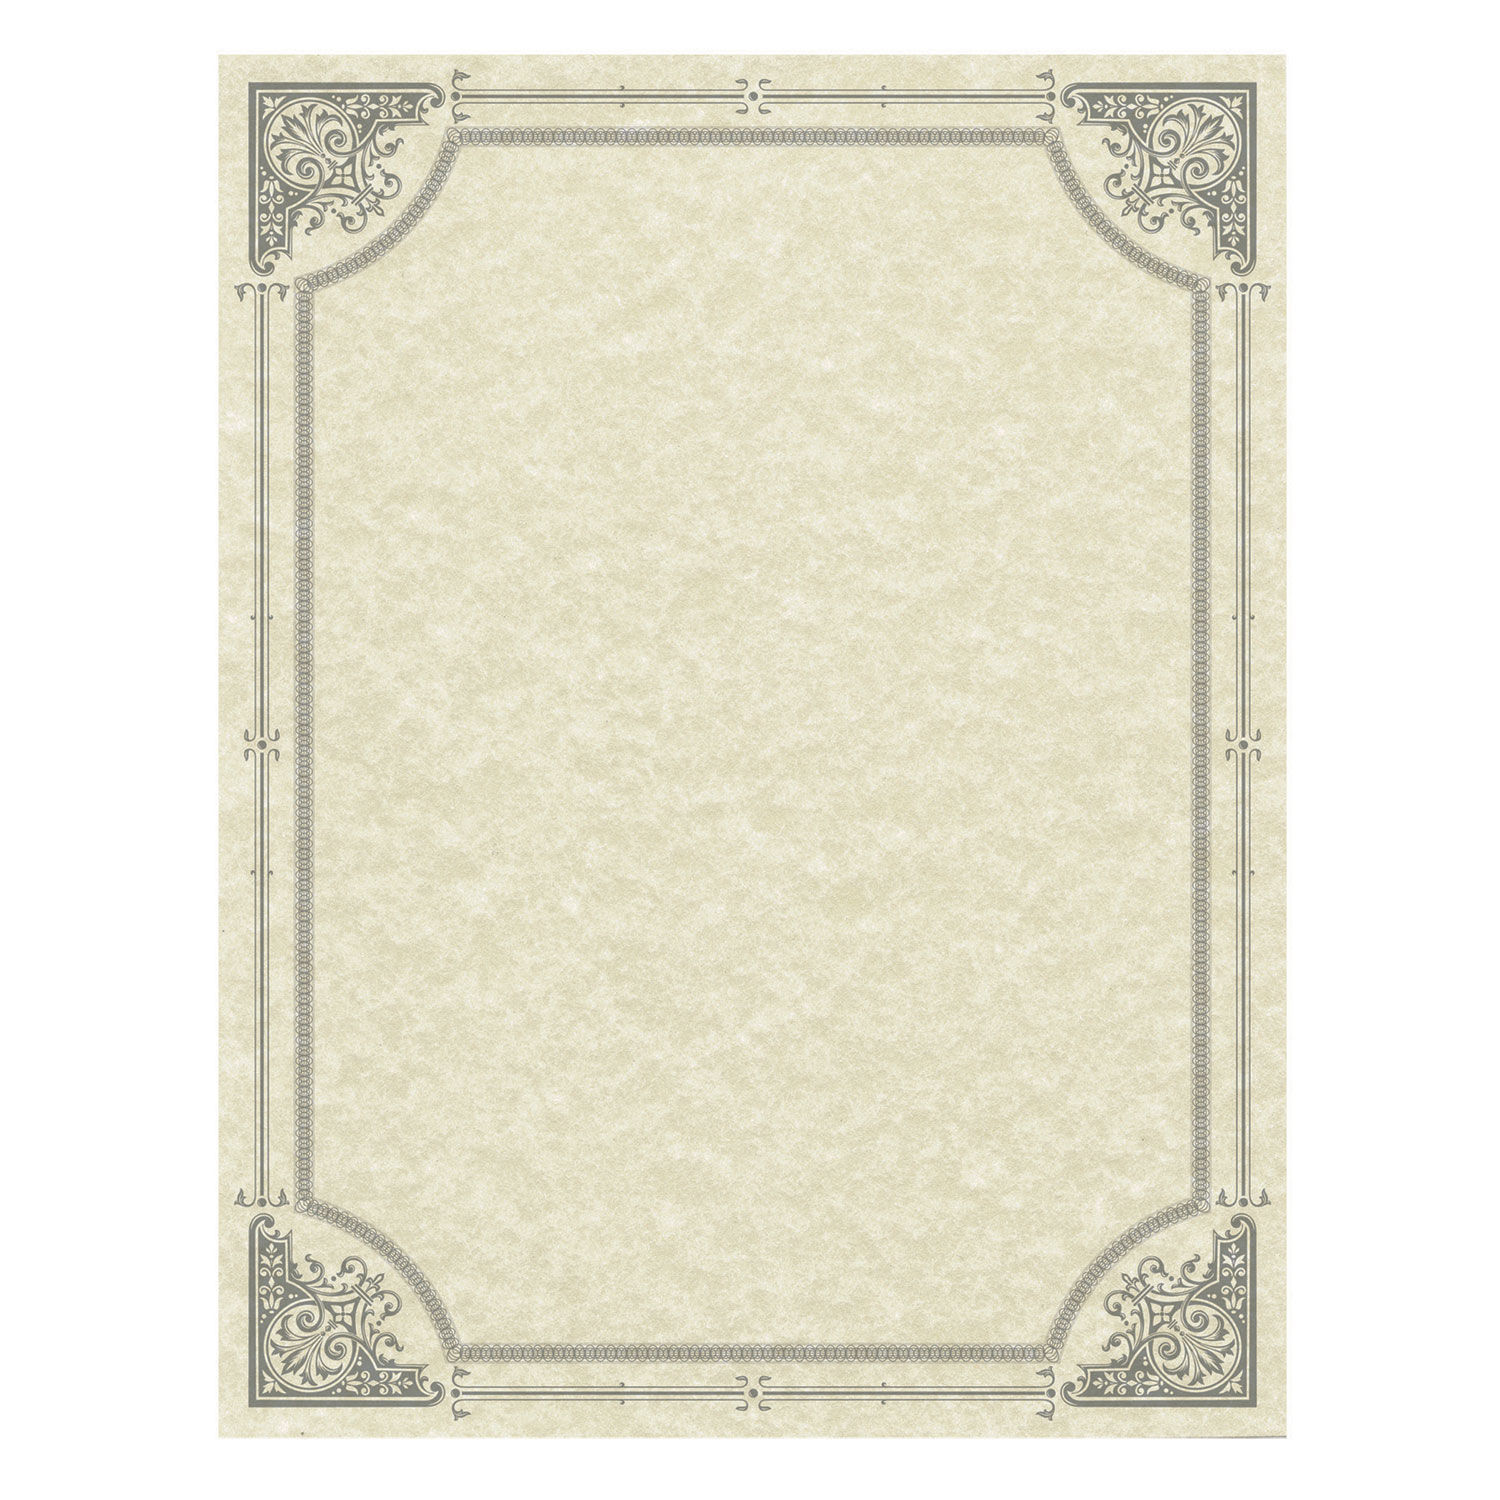 Parchment Certificates Vintage, 8.5 x 11, Ivory with Silver Foil Border, 50/Pack